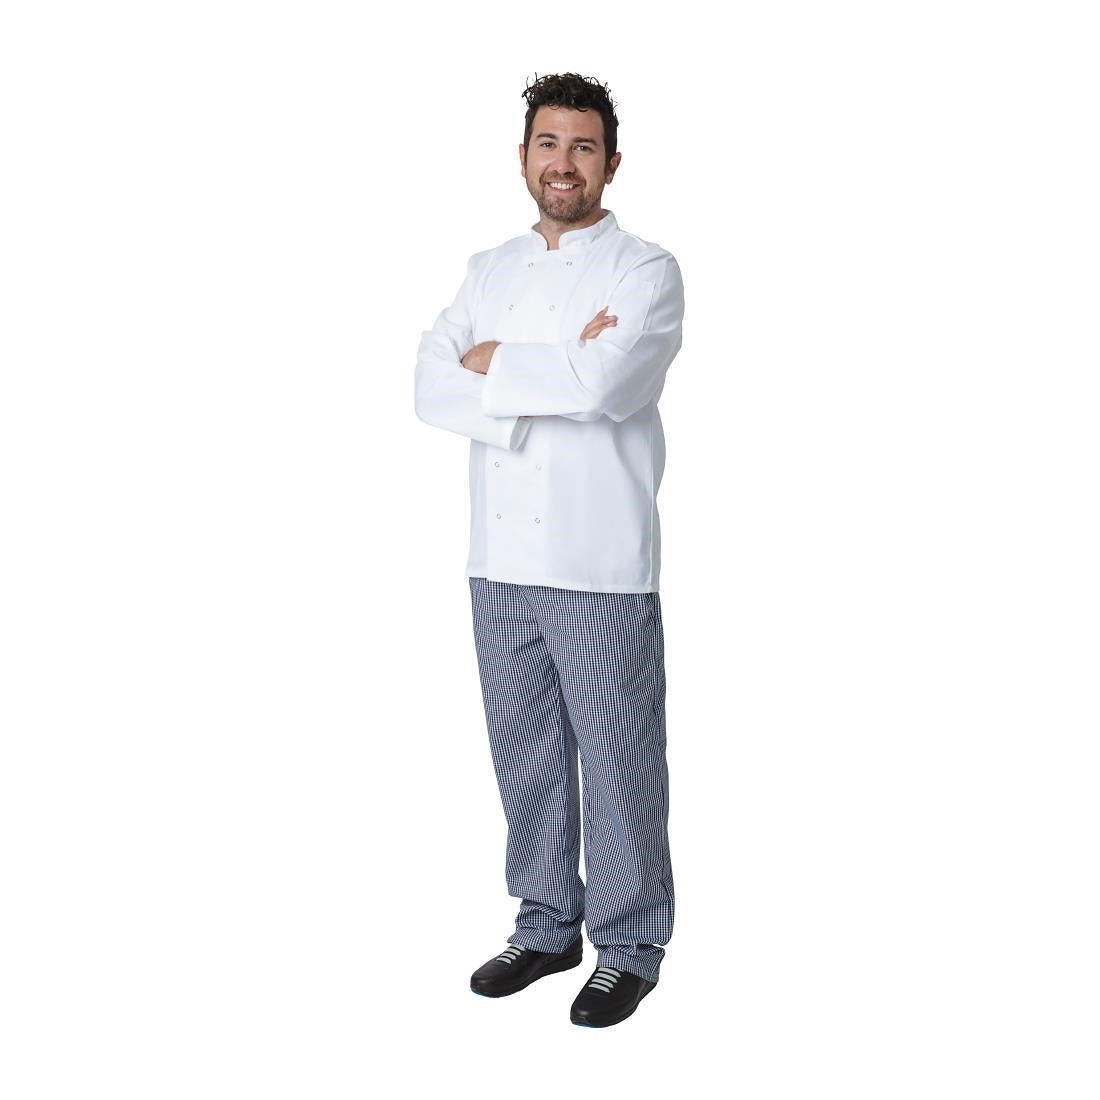 A134-M Whites Vegas Unisex Chefs Jacket Long Sleeve White M JD Catering Equipment Solutions Ltd